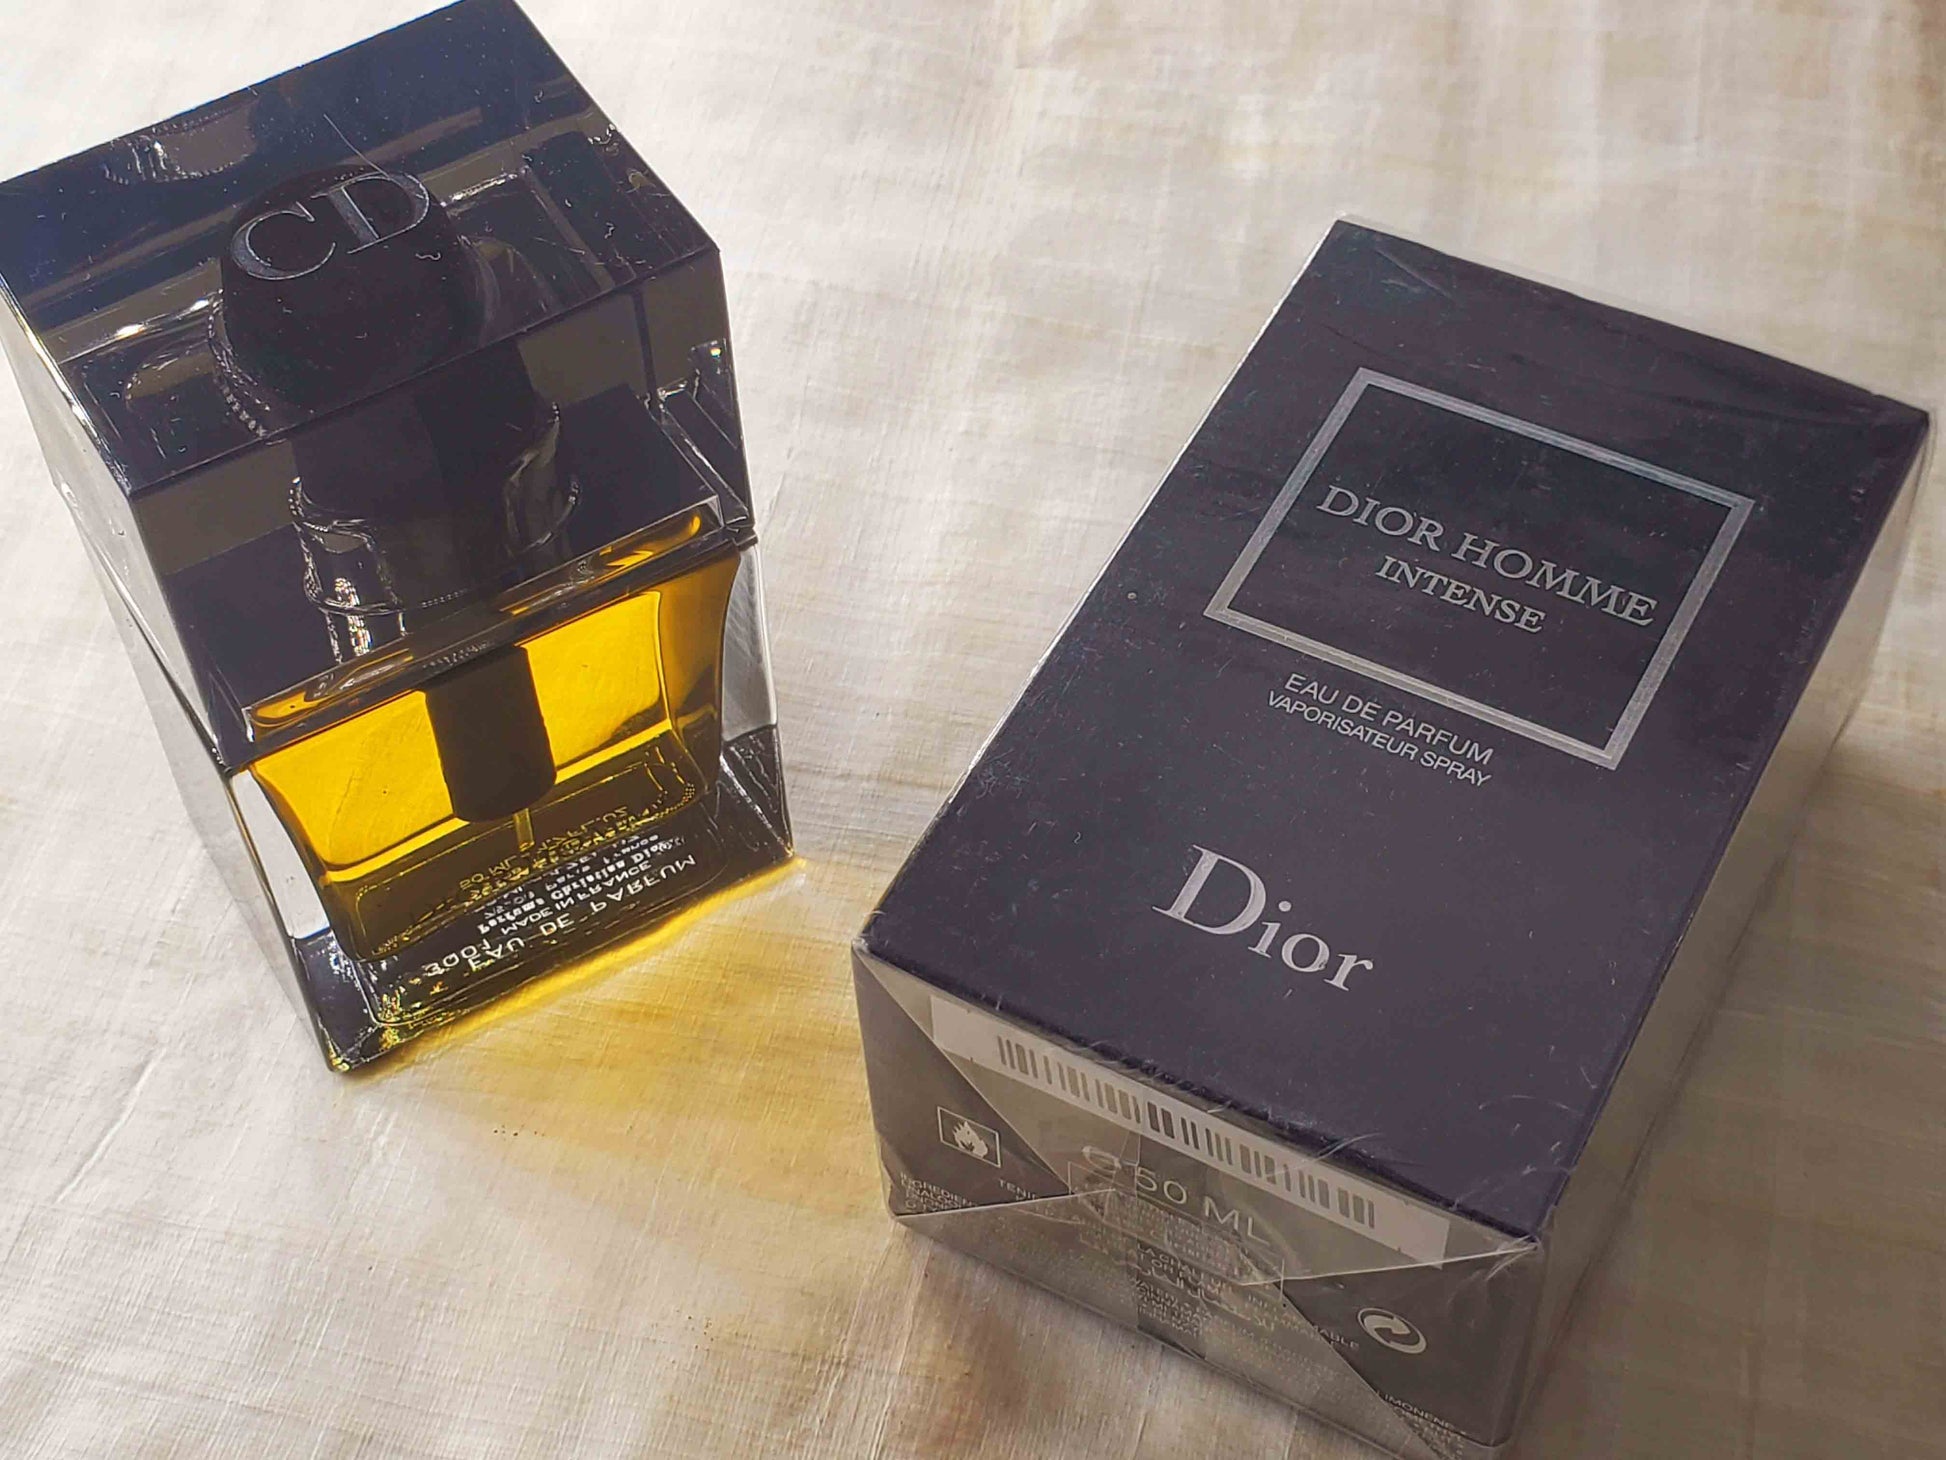 Dior Homme Intense by Christian Dior for Men 5 oz Edp Spray